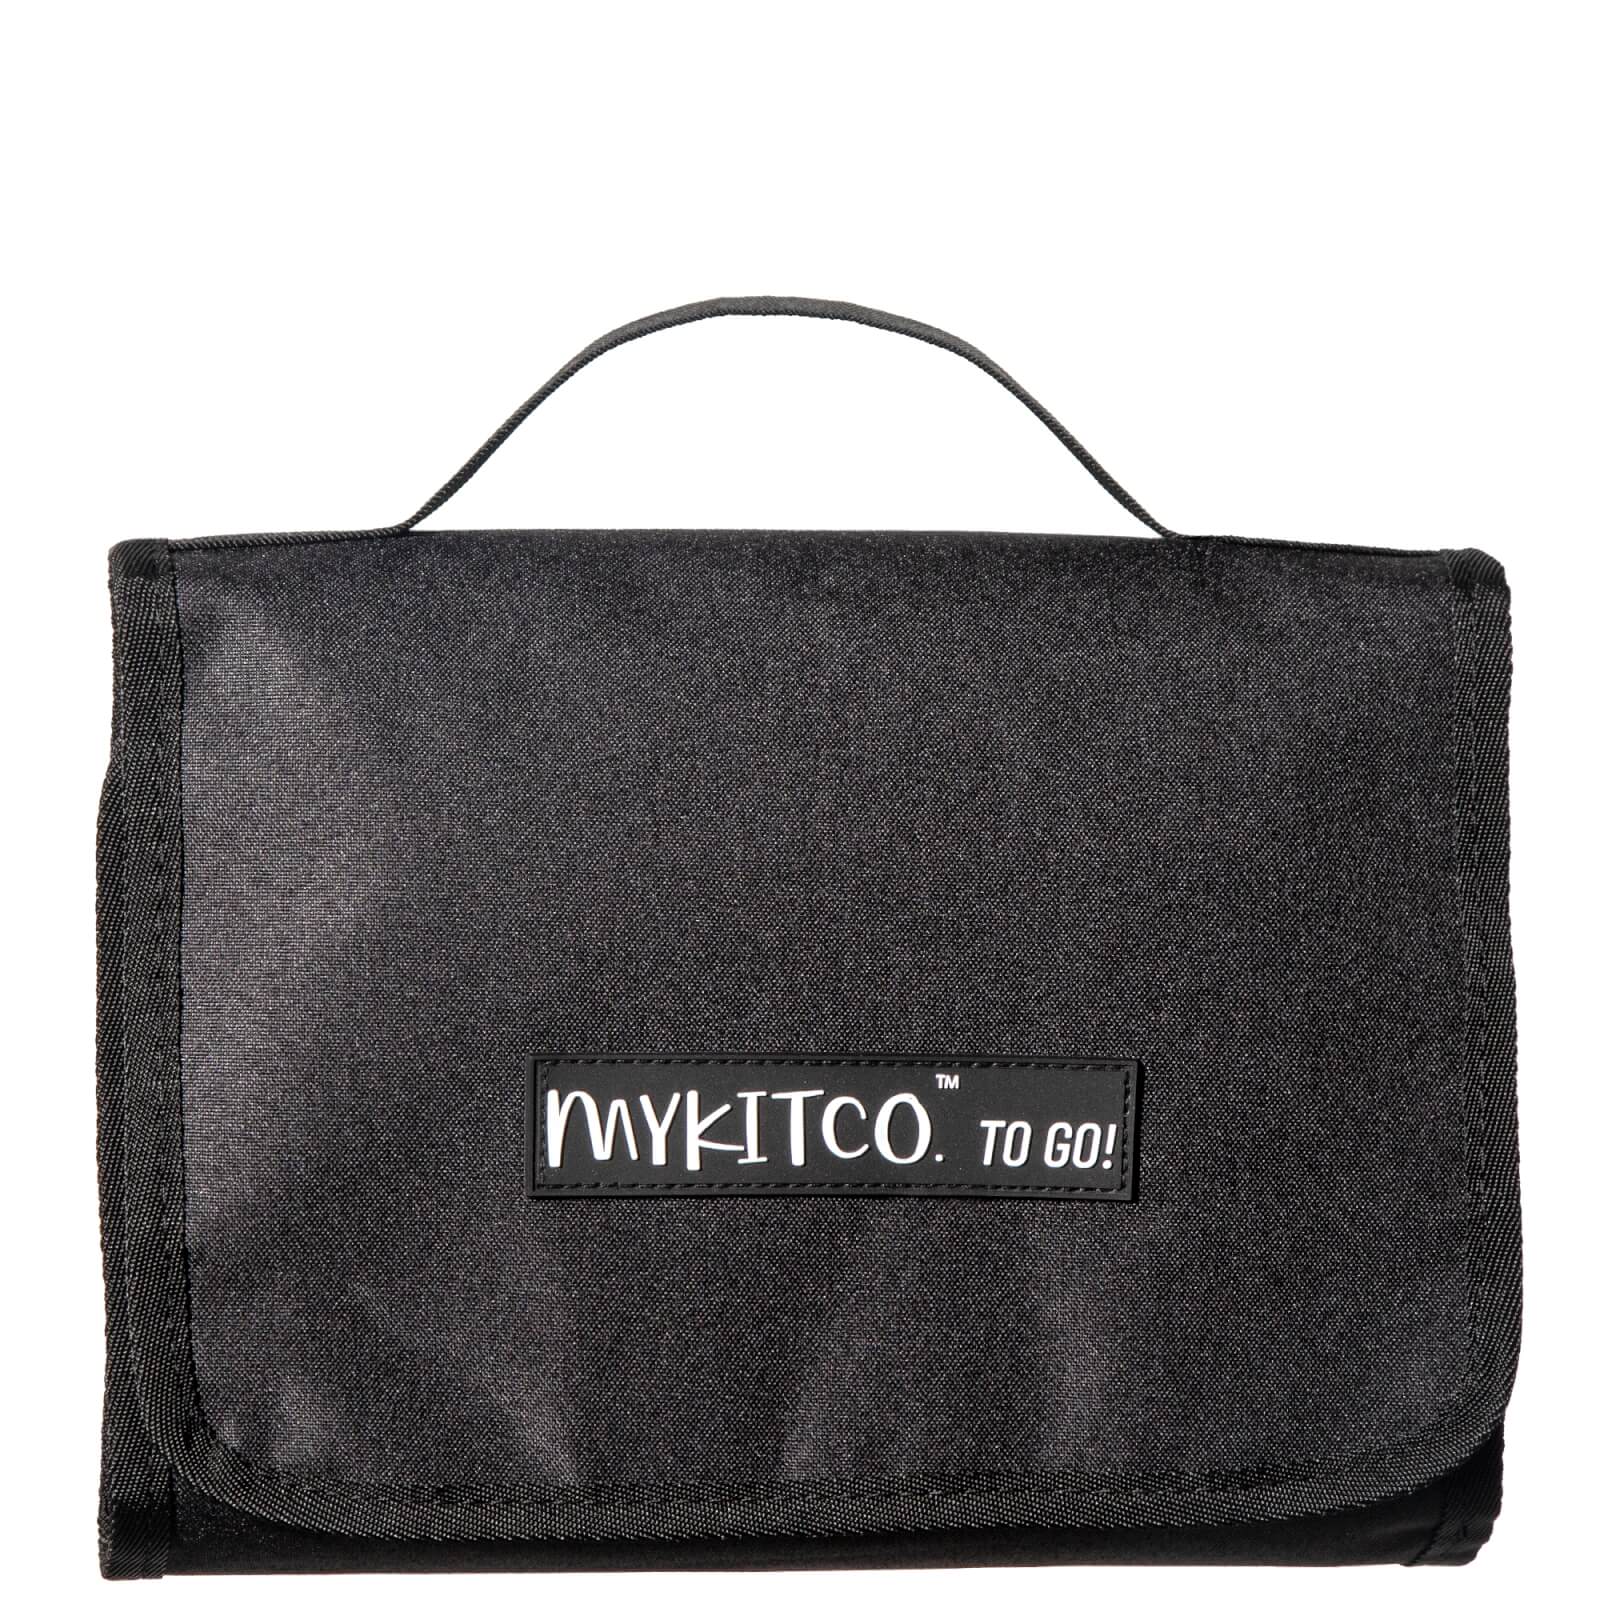 MYKITCO. To Go! Travel Bag